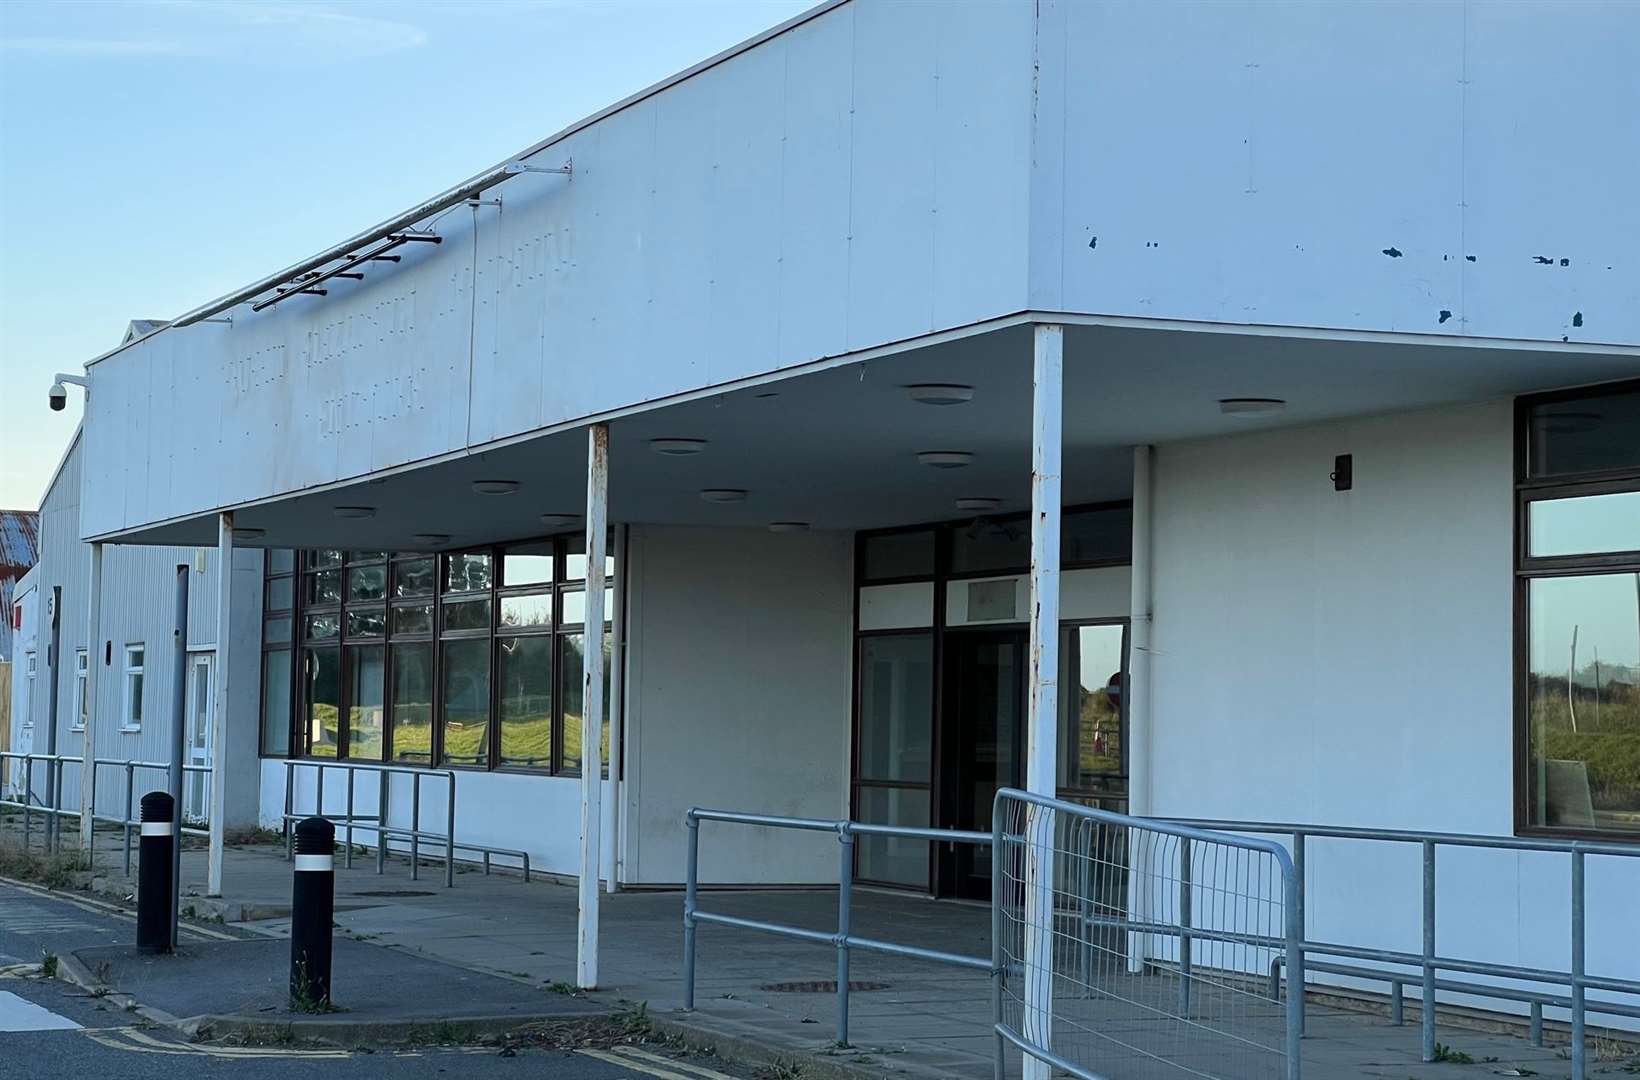 Manston Airport has stood empty since 2014